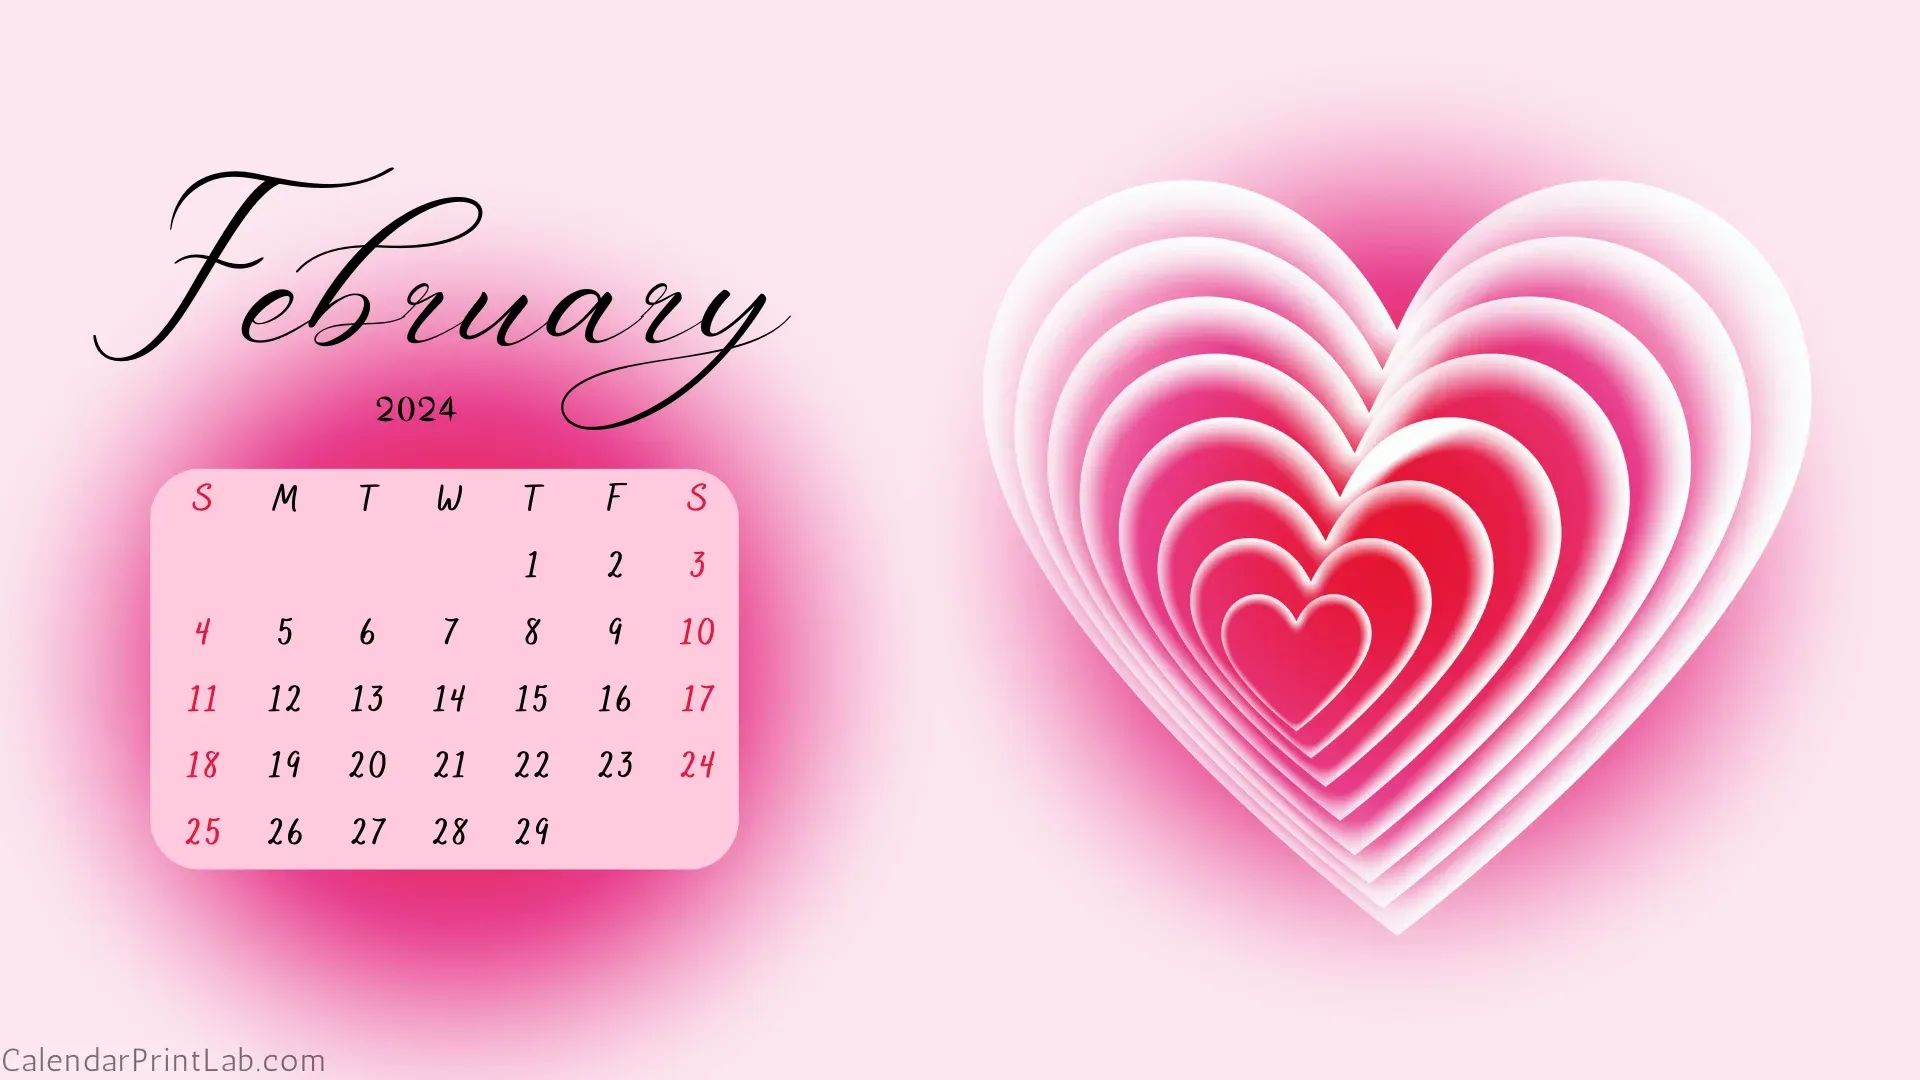 February 2024 Love Calendar Wallpaper